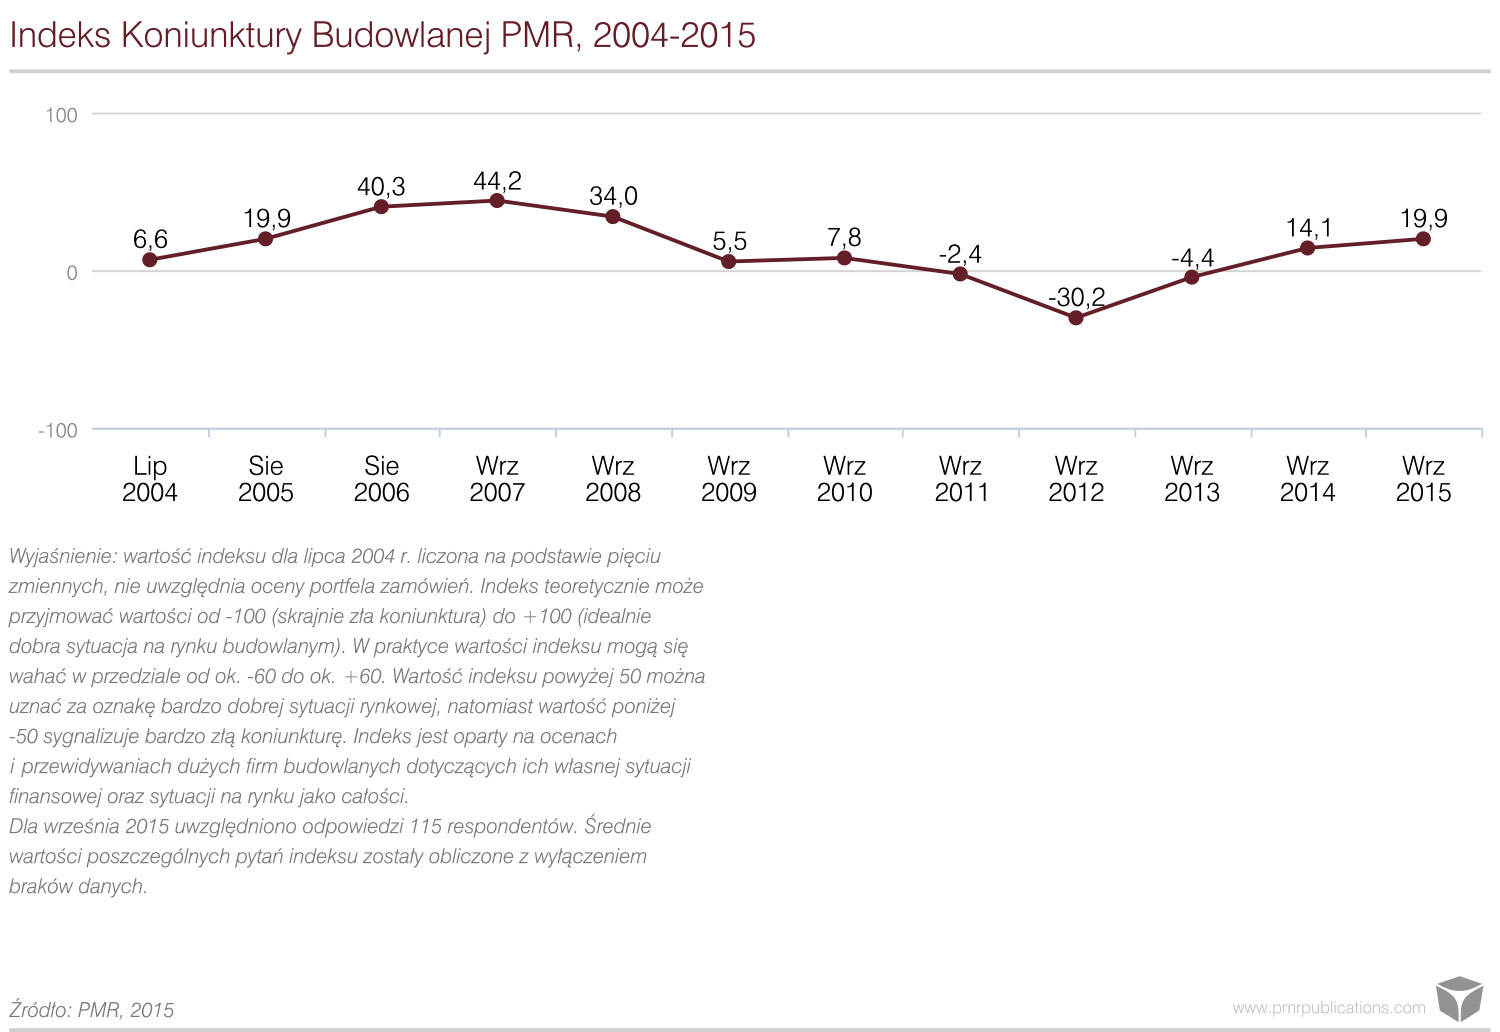 Indeks Koniunktury Budowlanej PMR 2004-2015